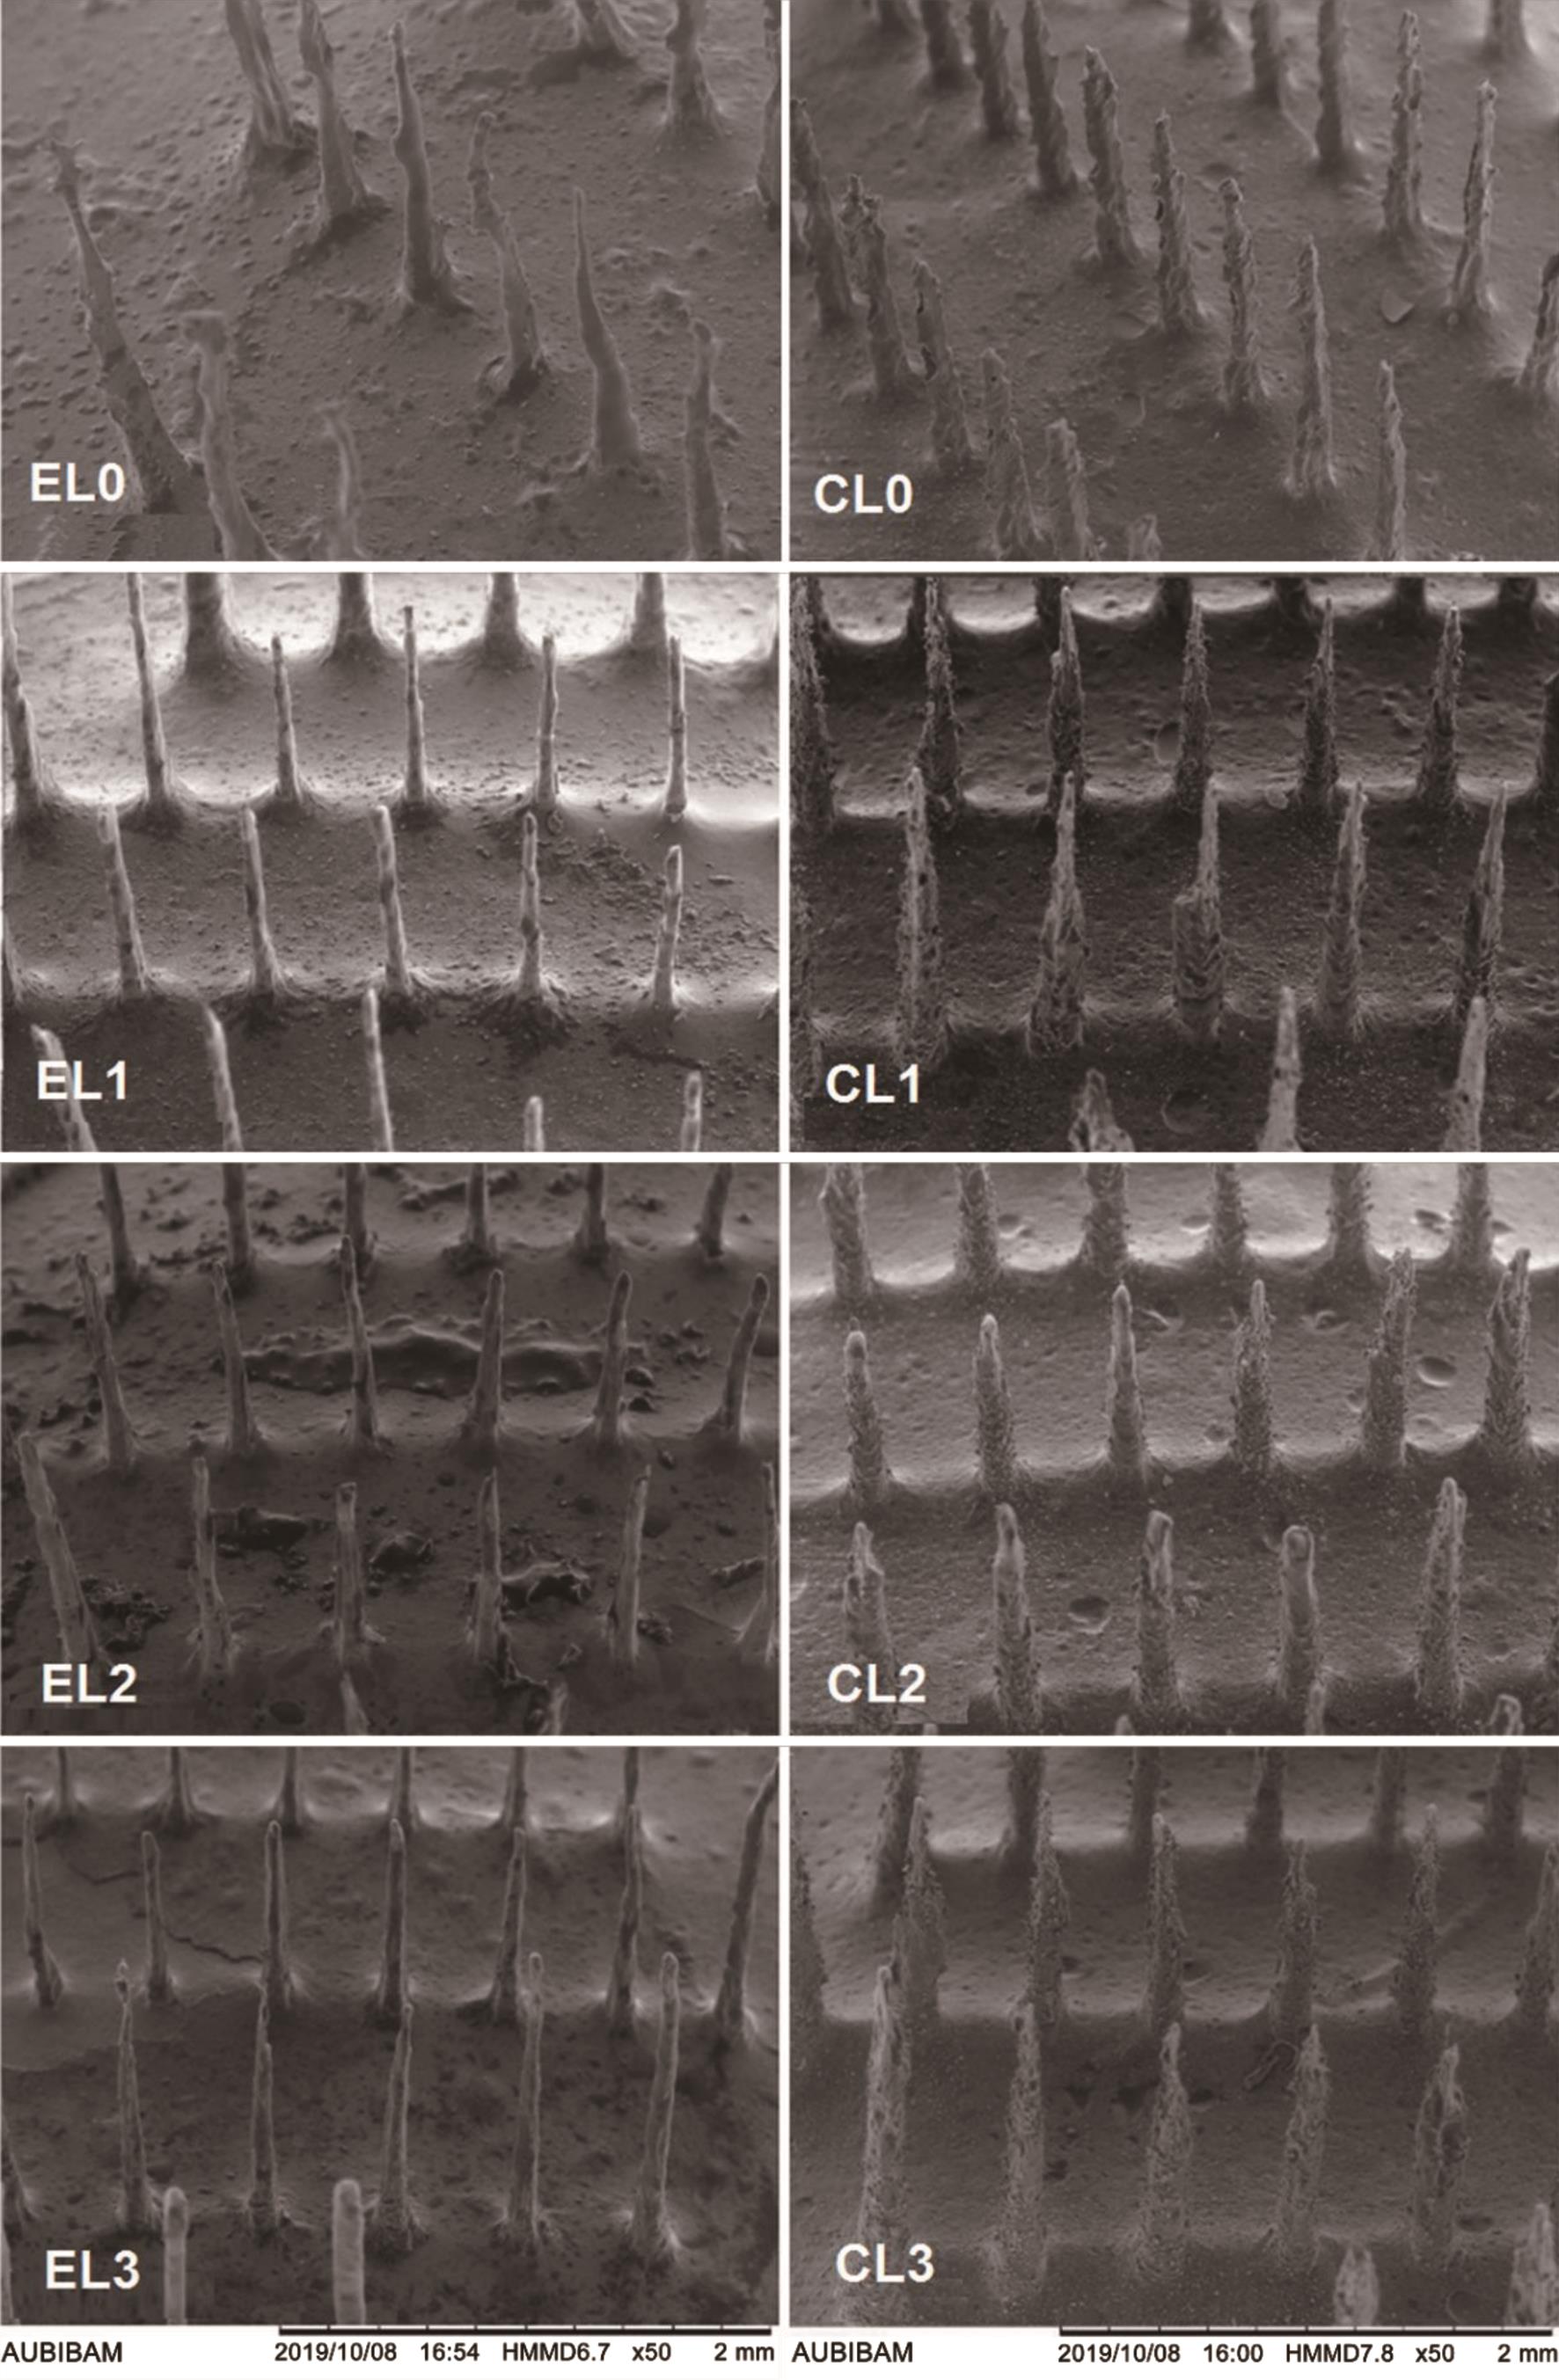 SEM images of microneedle patches [Left column Eudragit S 100 (ES100) based formulations (EL0, EL1, EL2, and EL3) and right column carboxymethyl cellulose (CMC) based formulations (CL0, CL1, CL2, and CL3)].